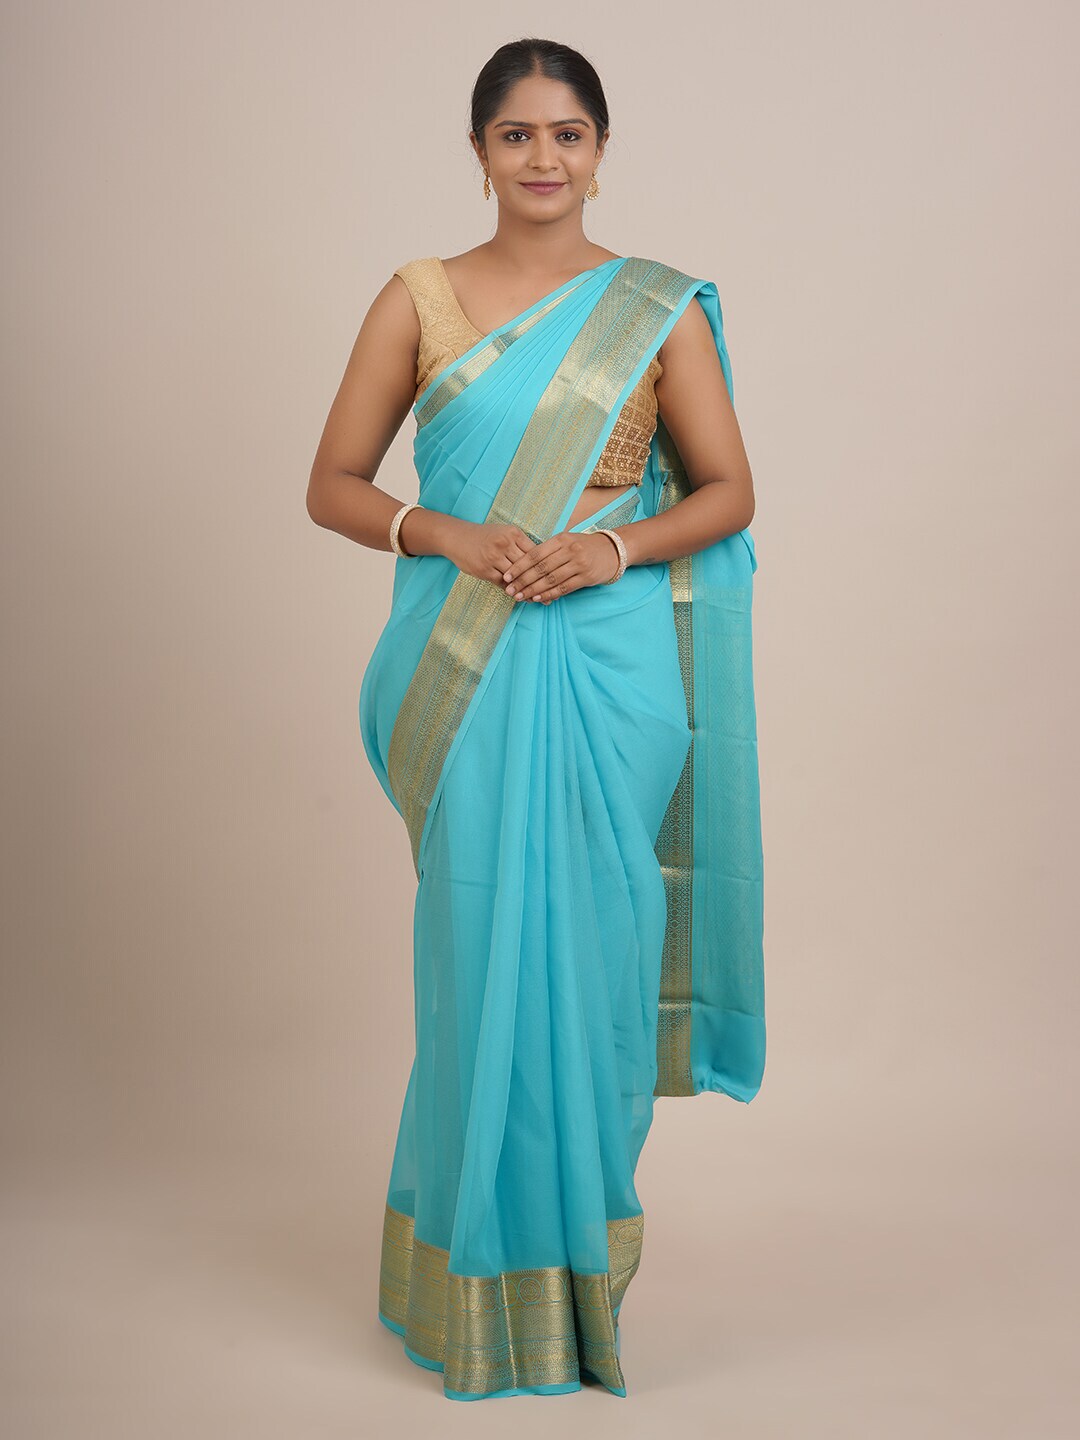 Pothys Blue & Gold-Toned Zari Pure Silk Saree Price in India